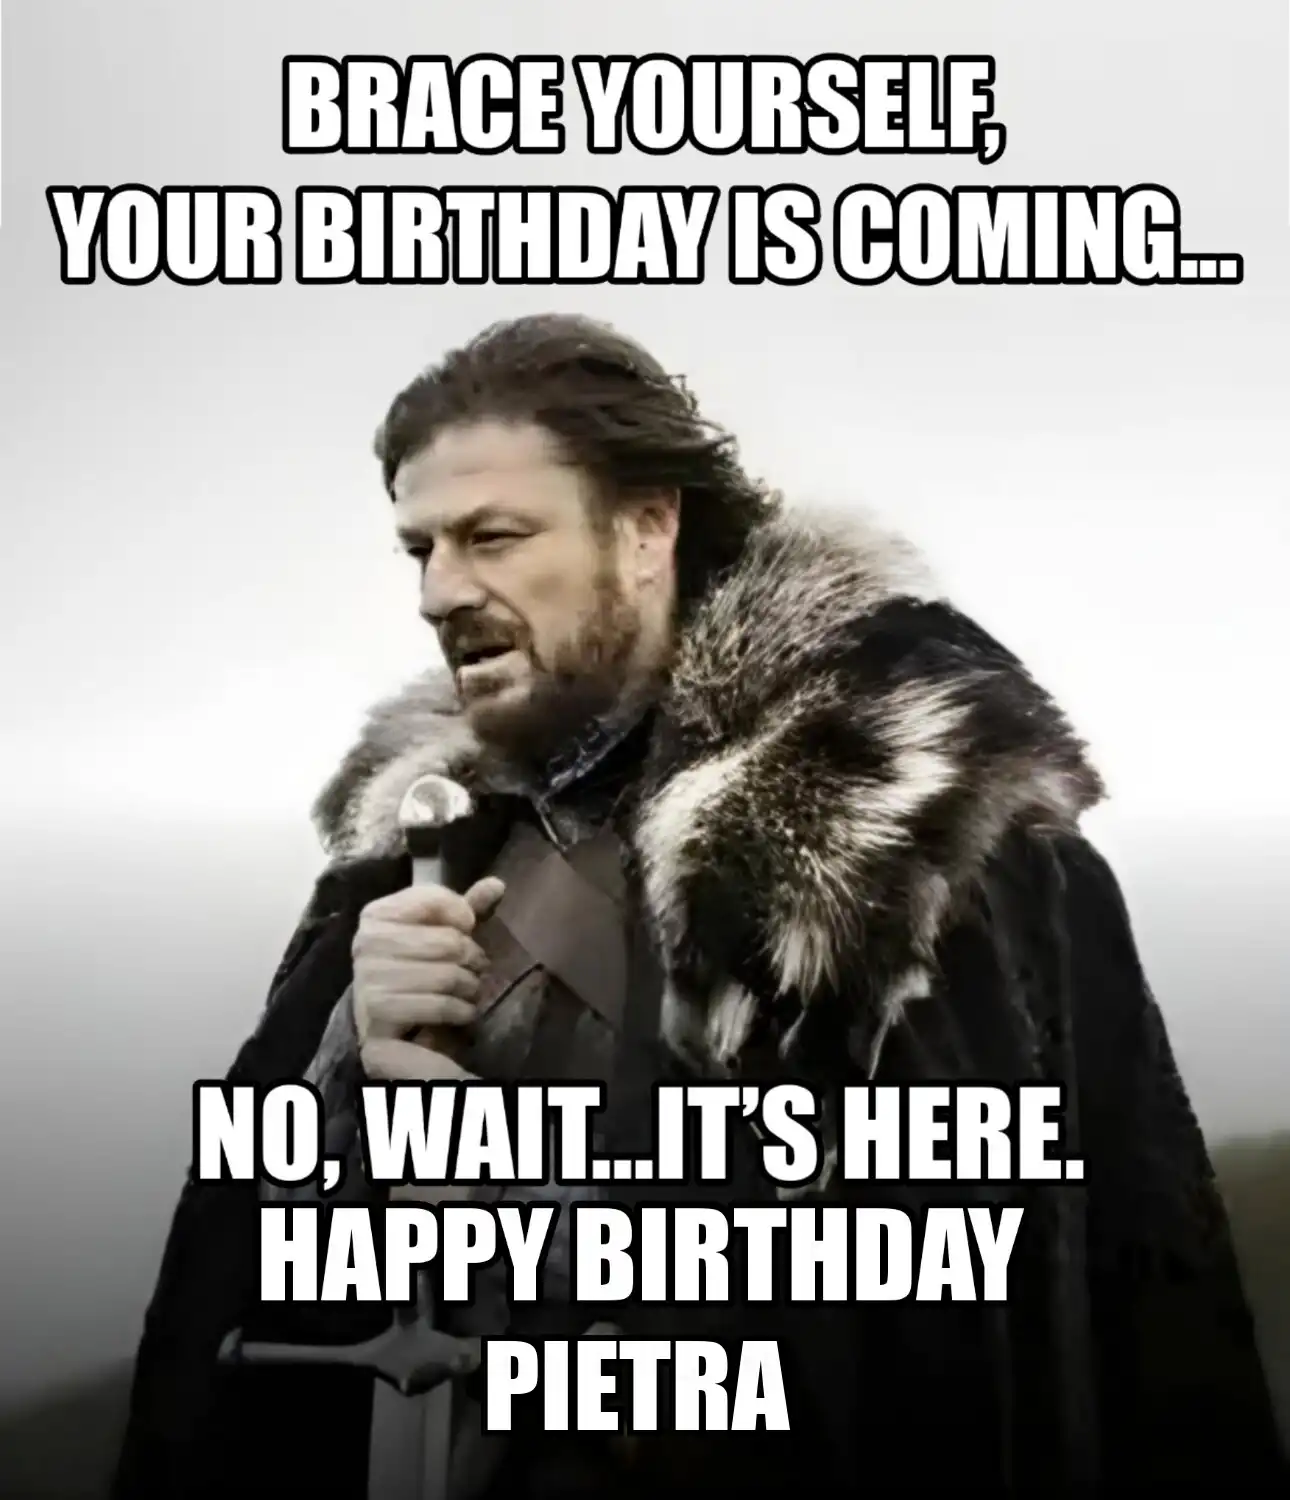 Happy Birthday Pietra Brace Yourself Your Birthday Is Coming Meme